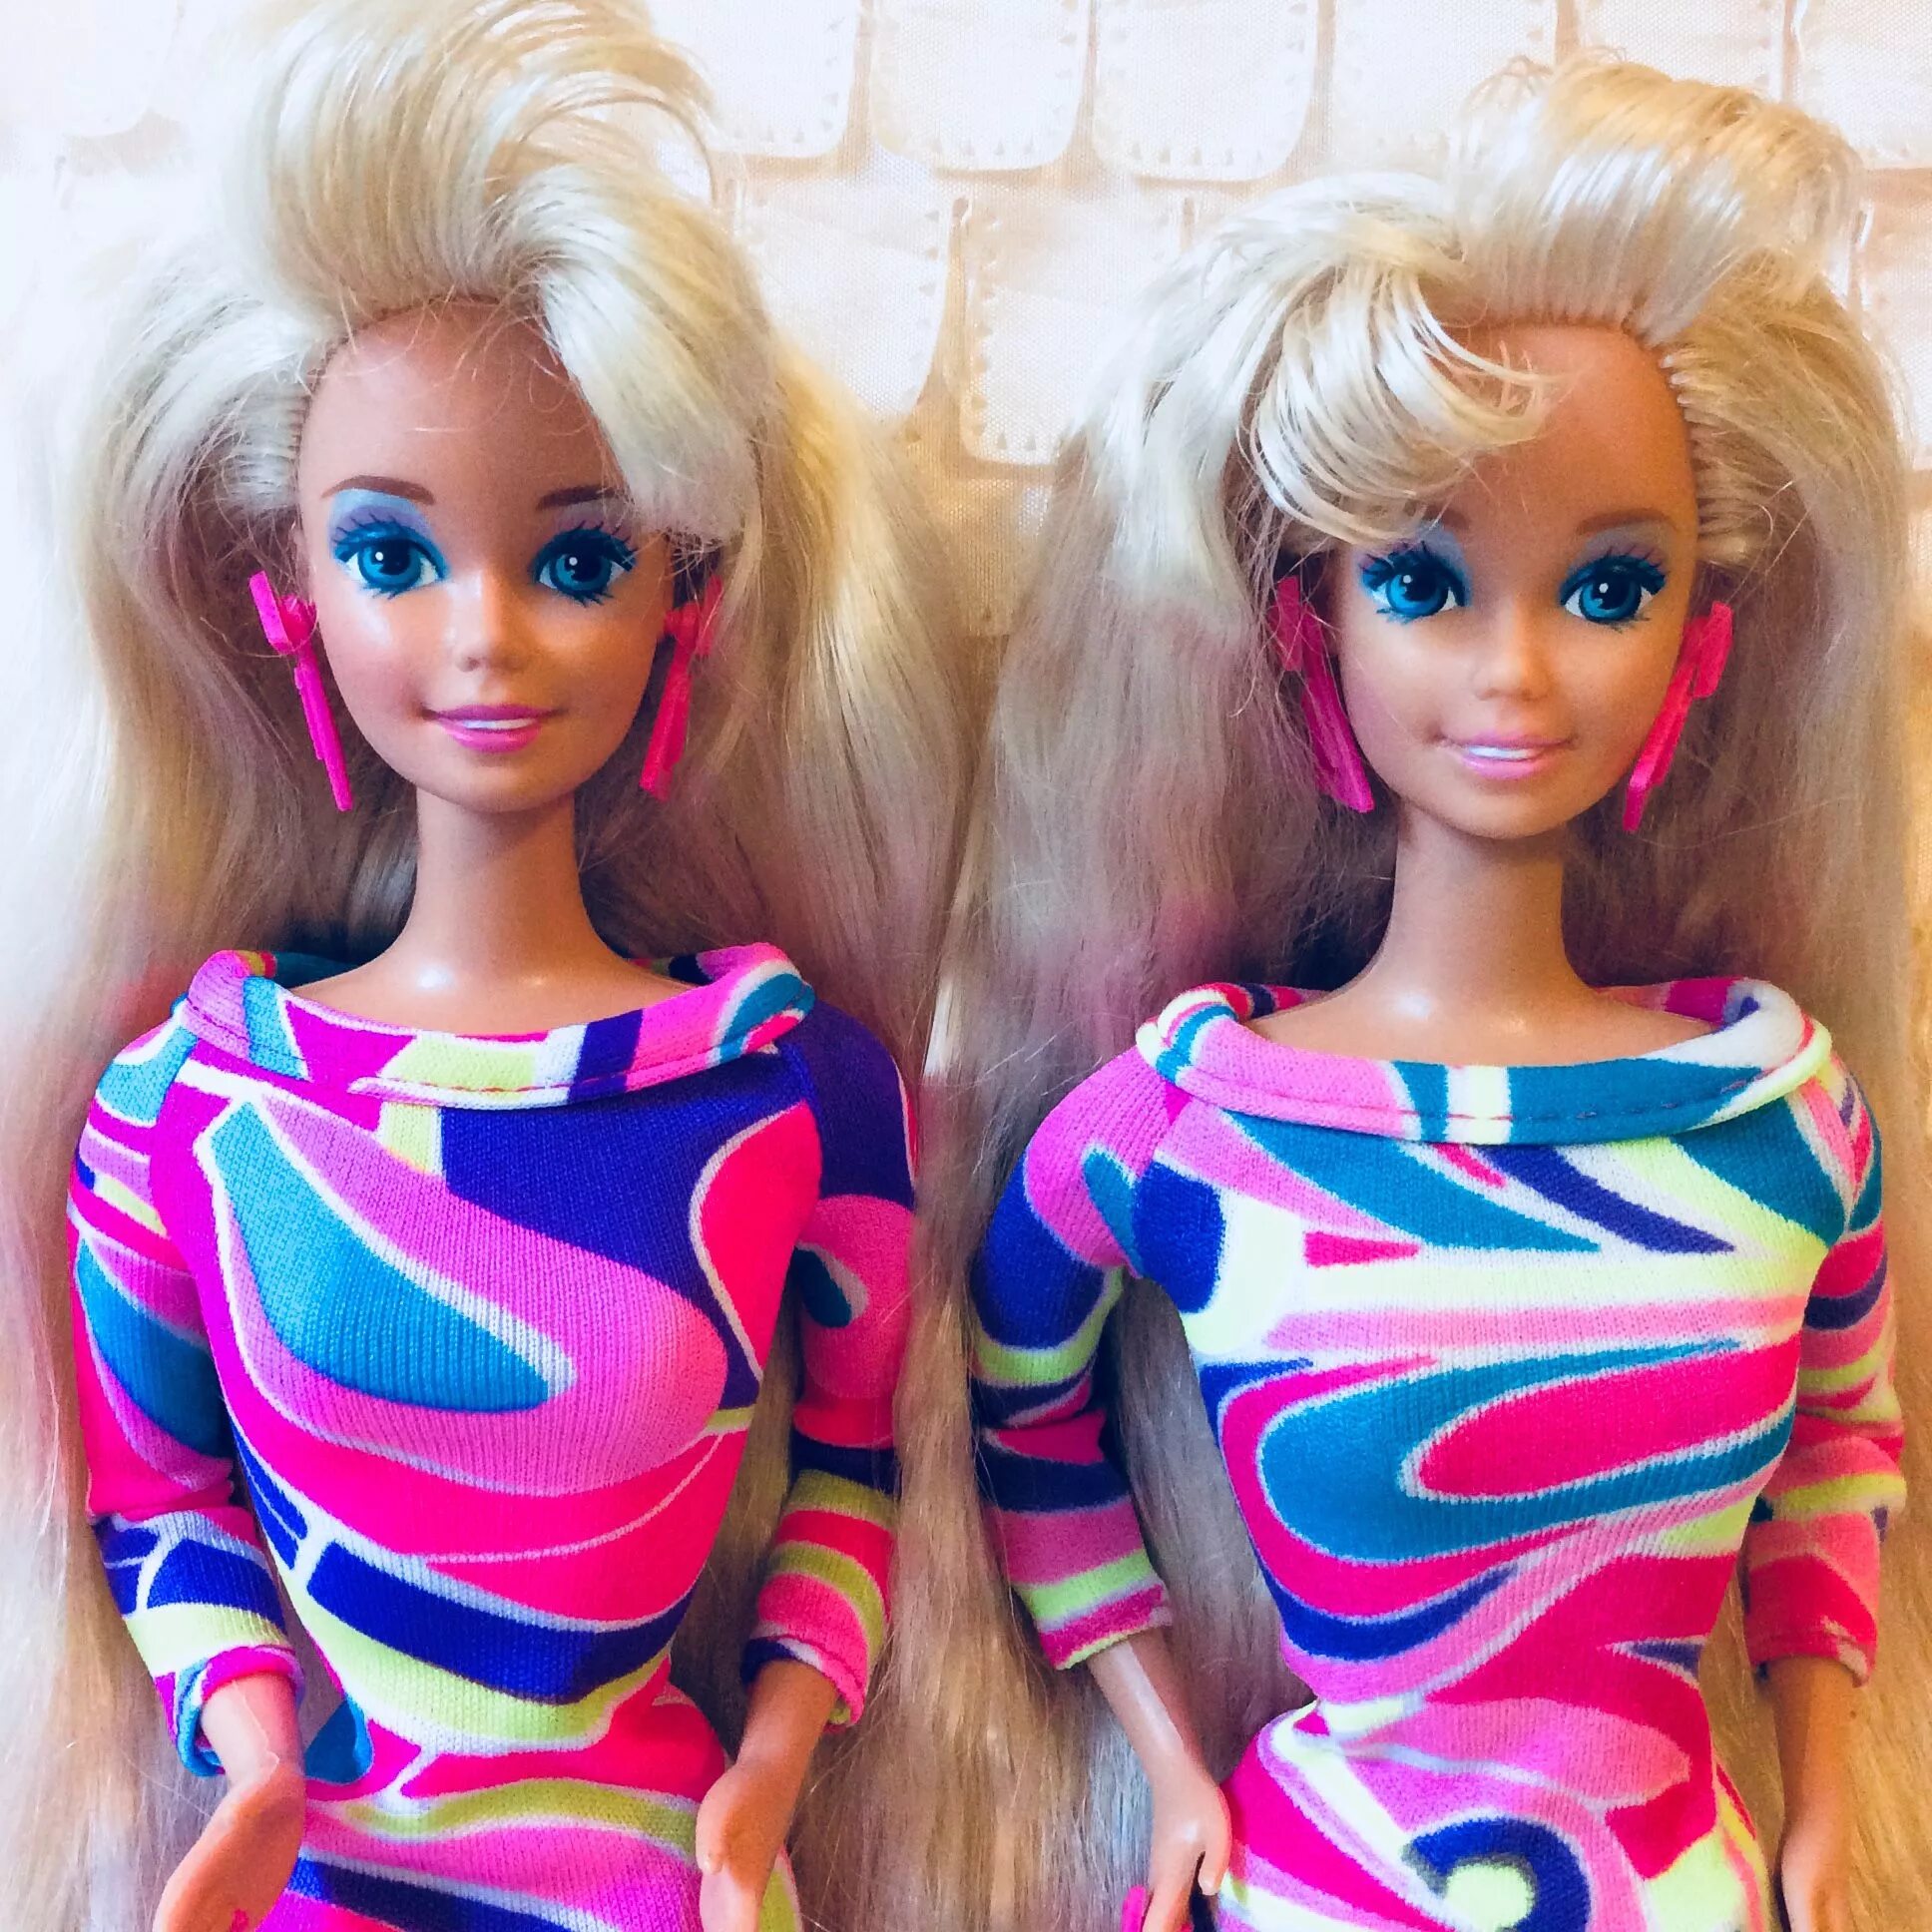 Барби тотали Хайр. Барби totally hair 1991. Кукла Барби тотали Хеир. Барби 90 тотали Хайр.